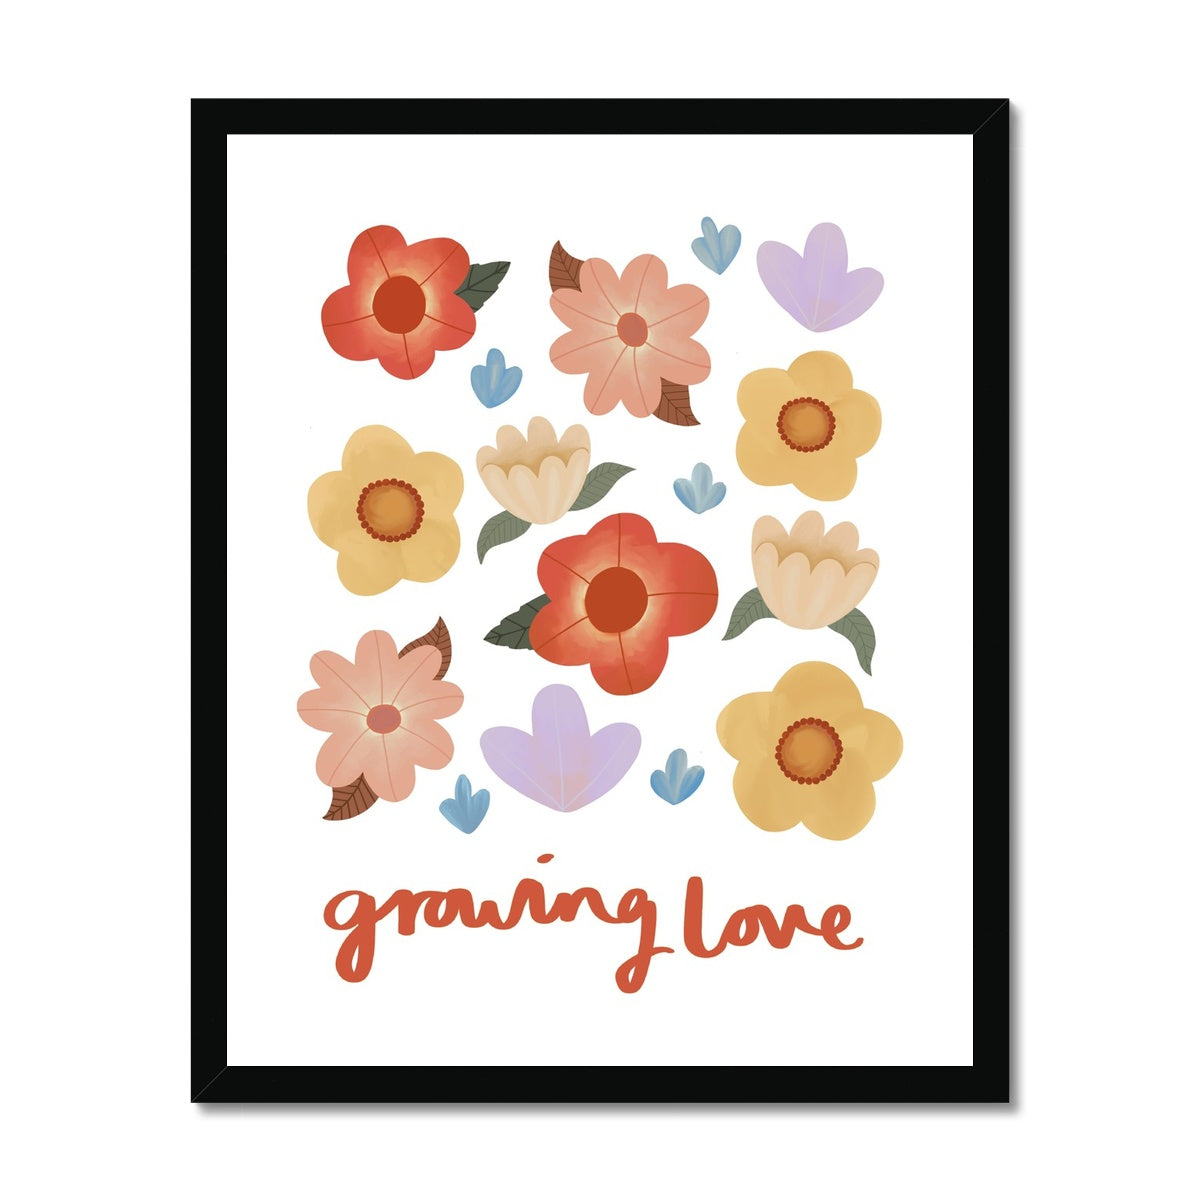 Growing love / Framed Print